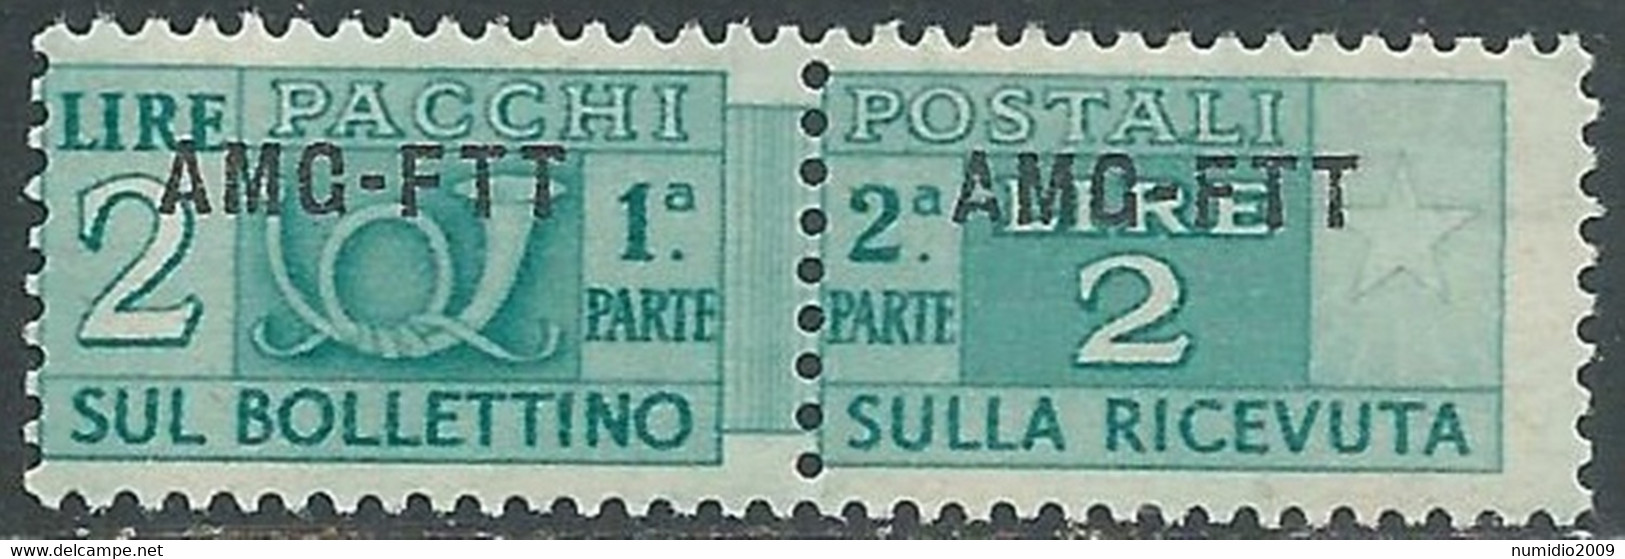 1949-53 TRIESTE A PACCHI POSTALI 2 LIRE MNH ** - RE24-6 - Postpaketen/concessie